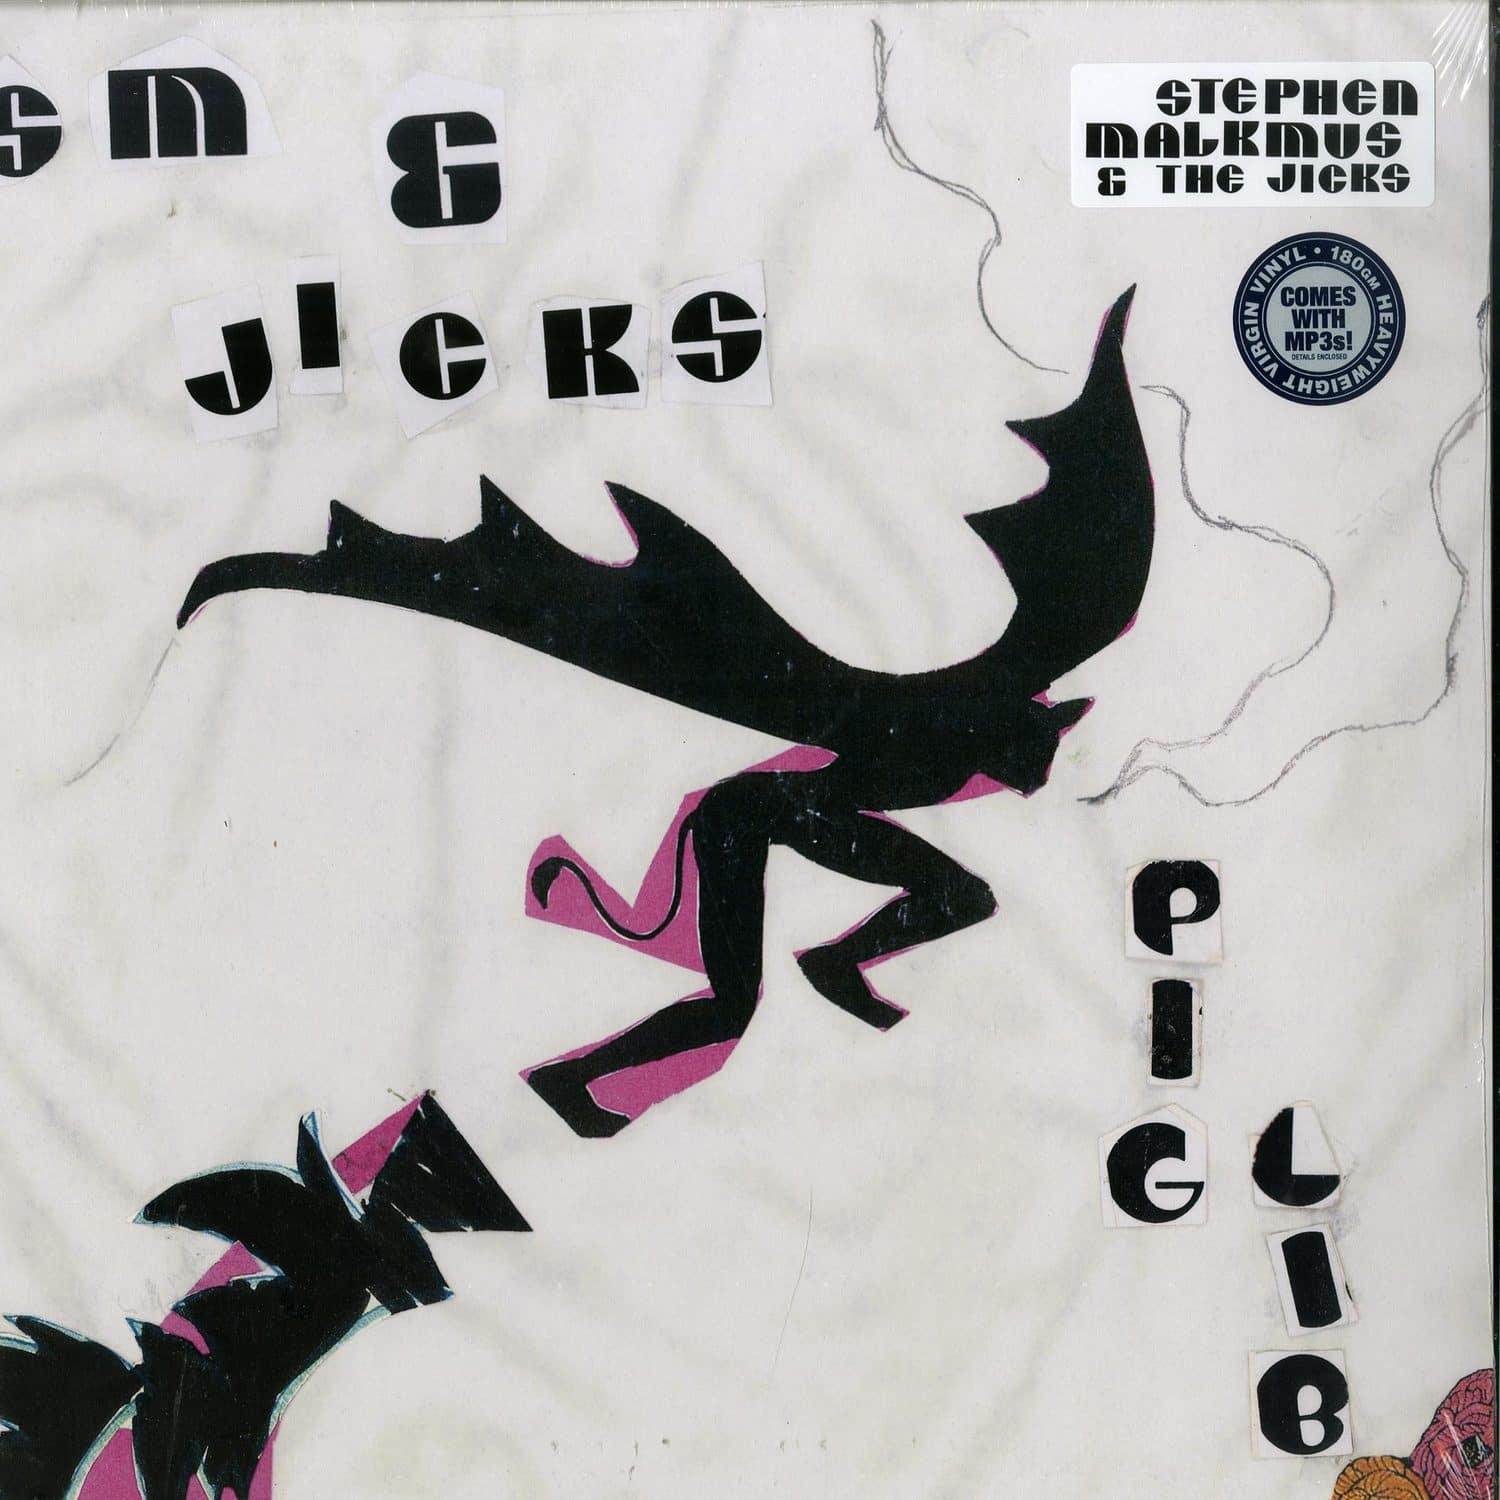 Stephen Malkmus & The Jicks - PIG LIB 